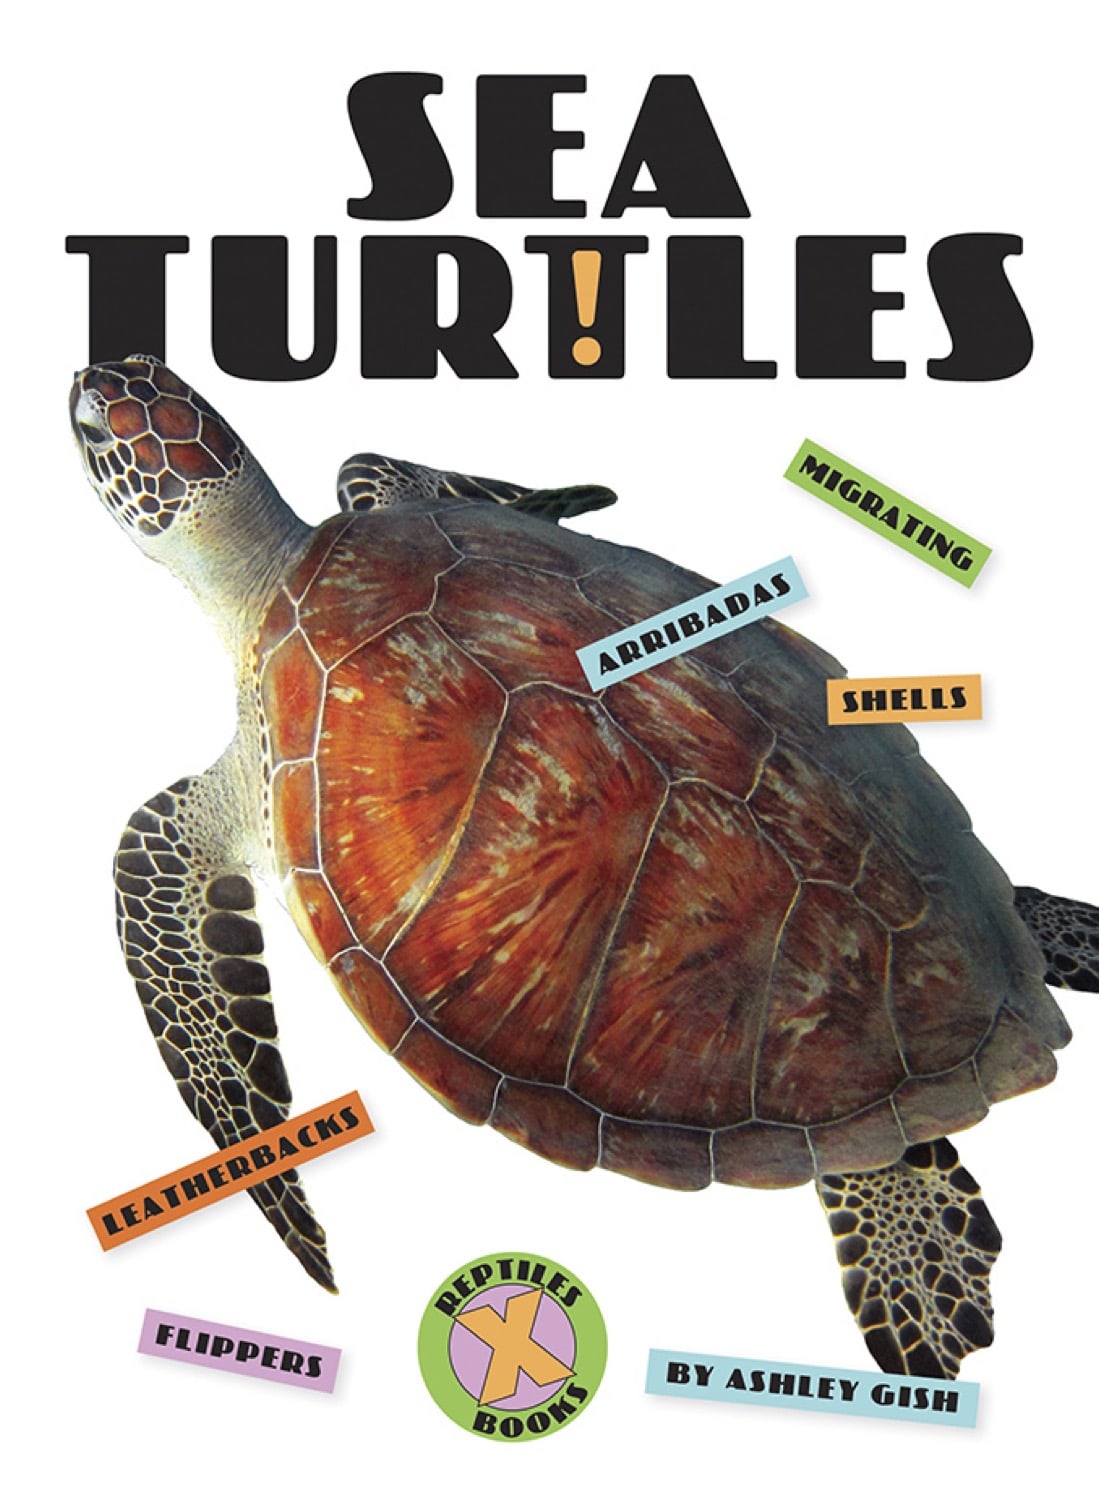 X-Books: Reptiles: Sea Turtles